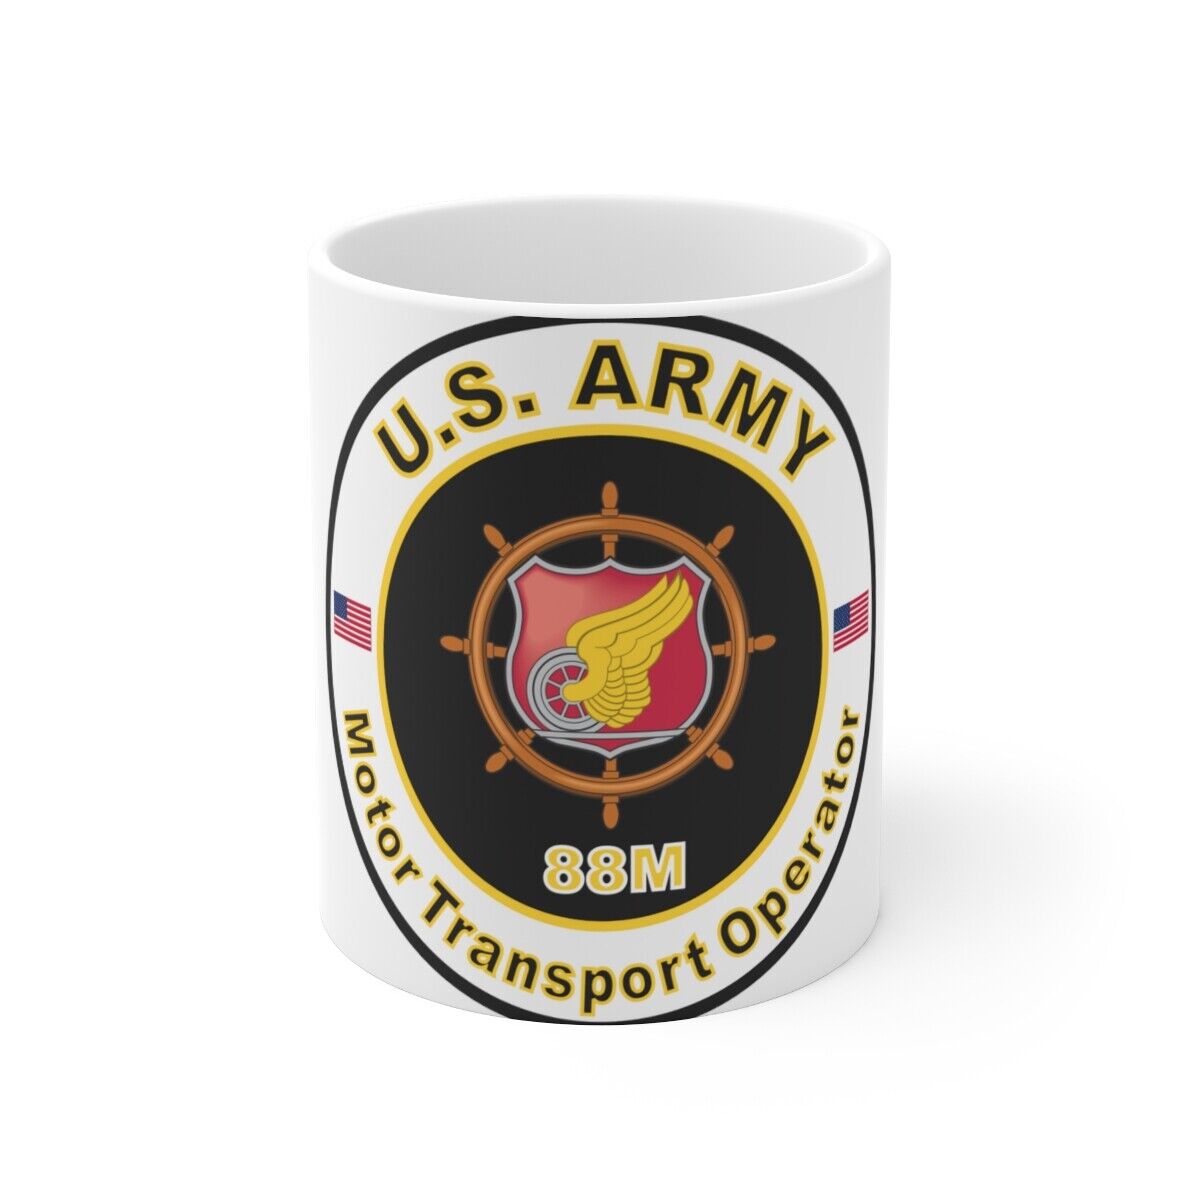 MOS 88M Motor Transport Operator (U.S. Army) White Coffee Cup 11oz